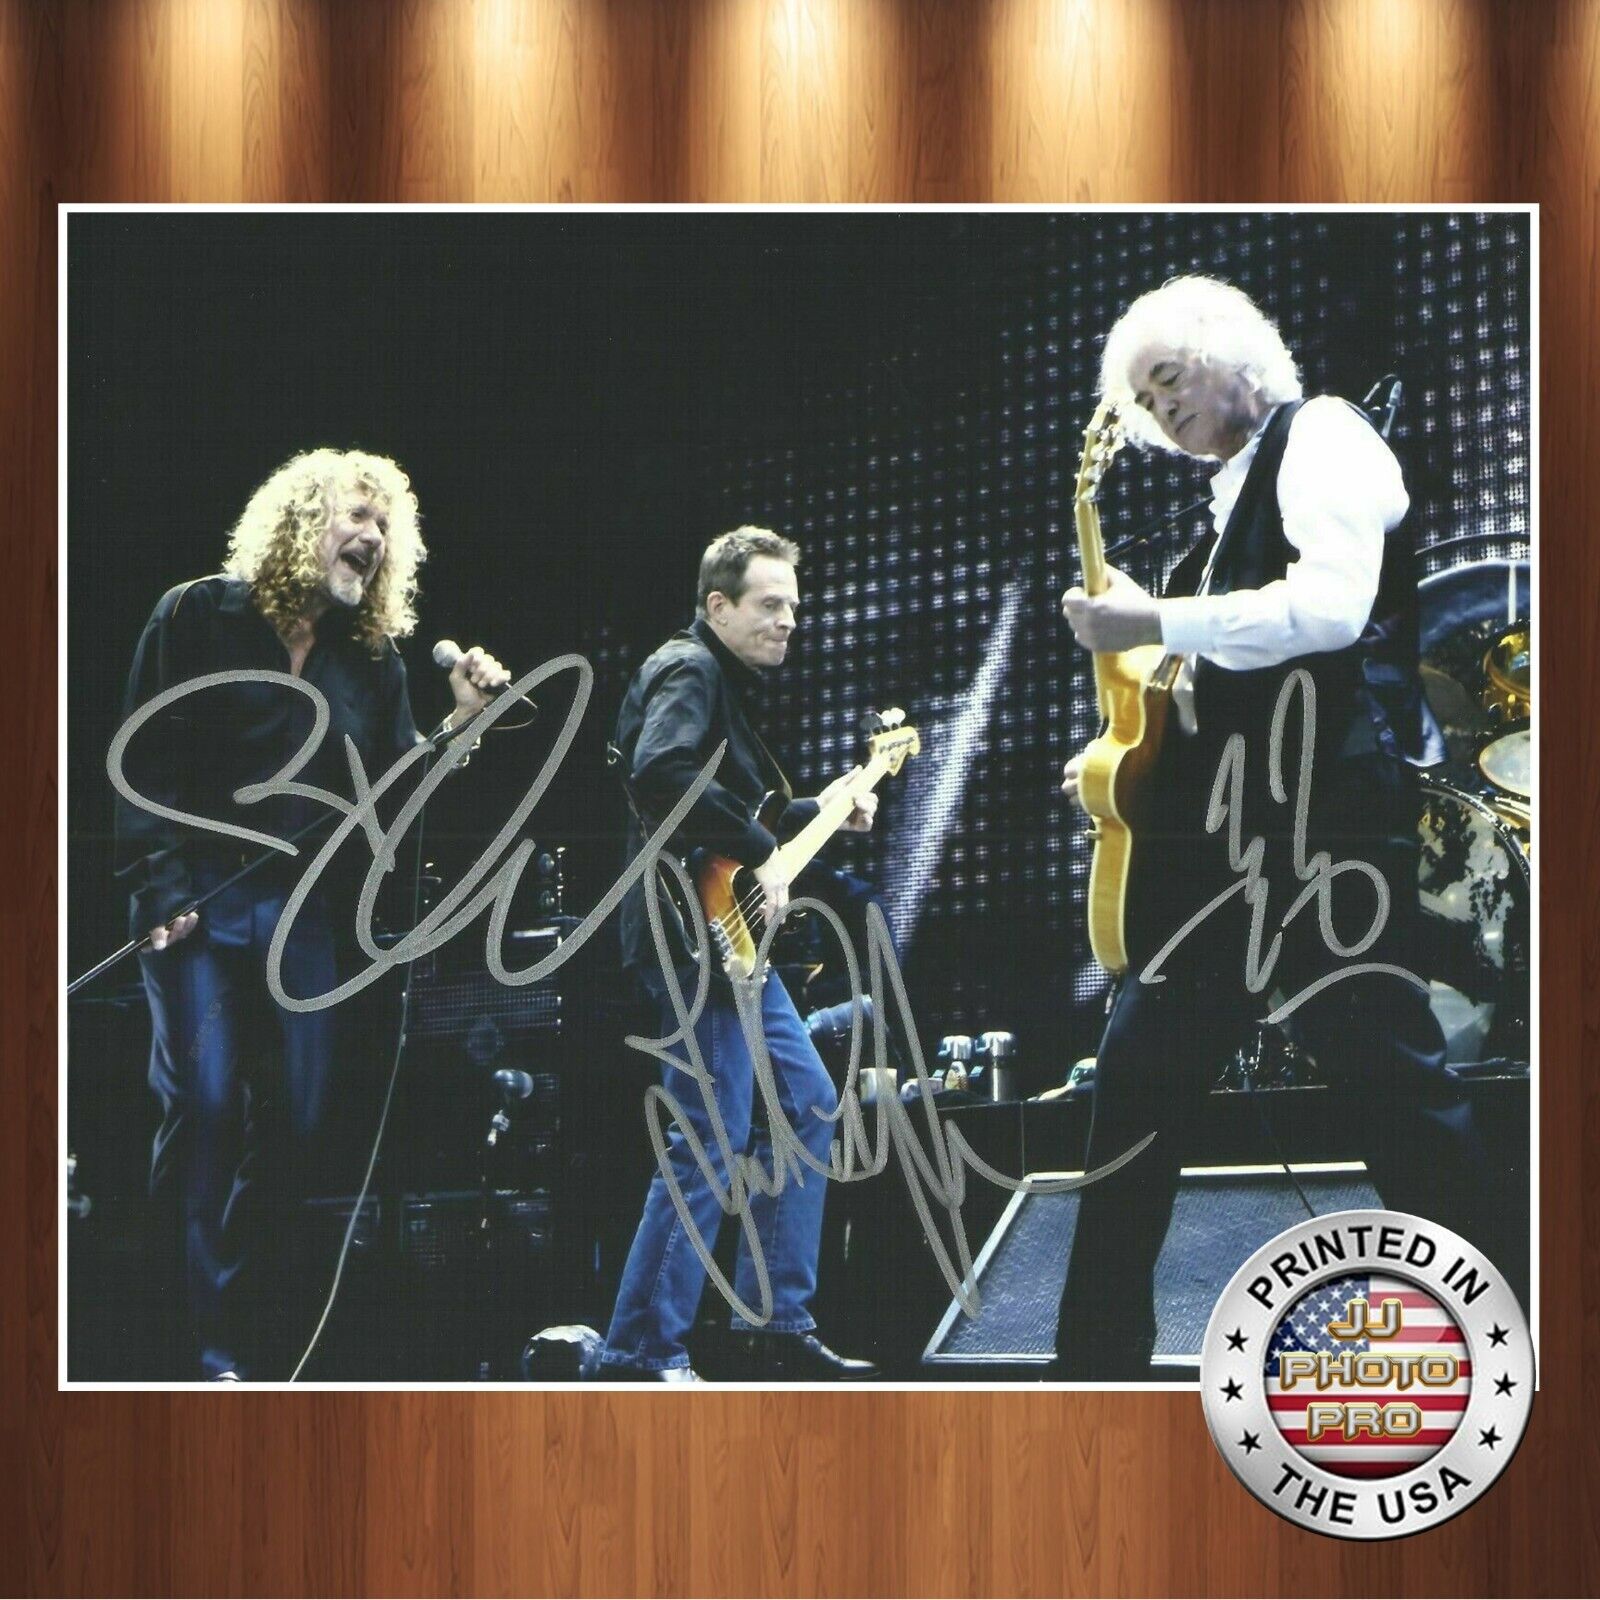 Robert Plant Paul Paige Autographed Signed 8x10 Photo Poster painting (Led Zeppelin) REPRINT